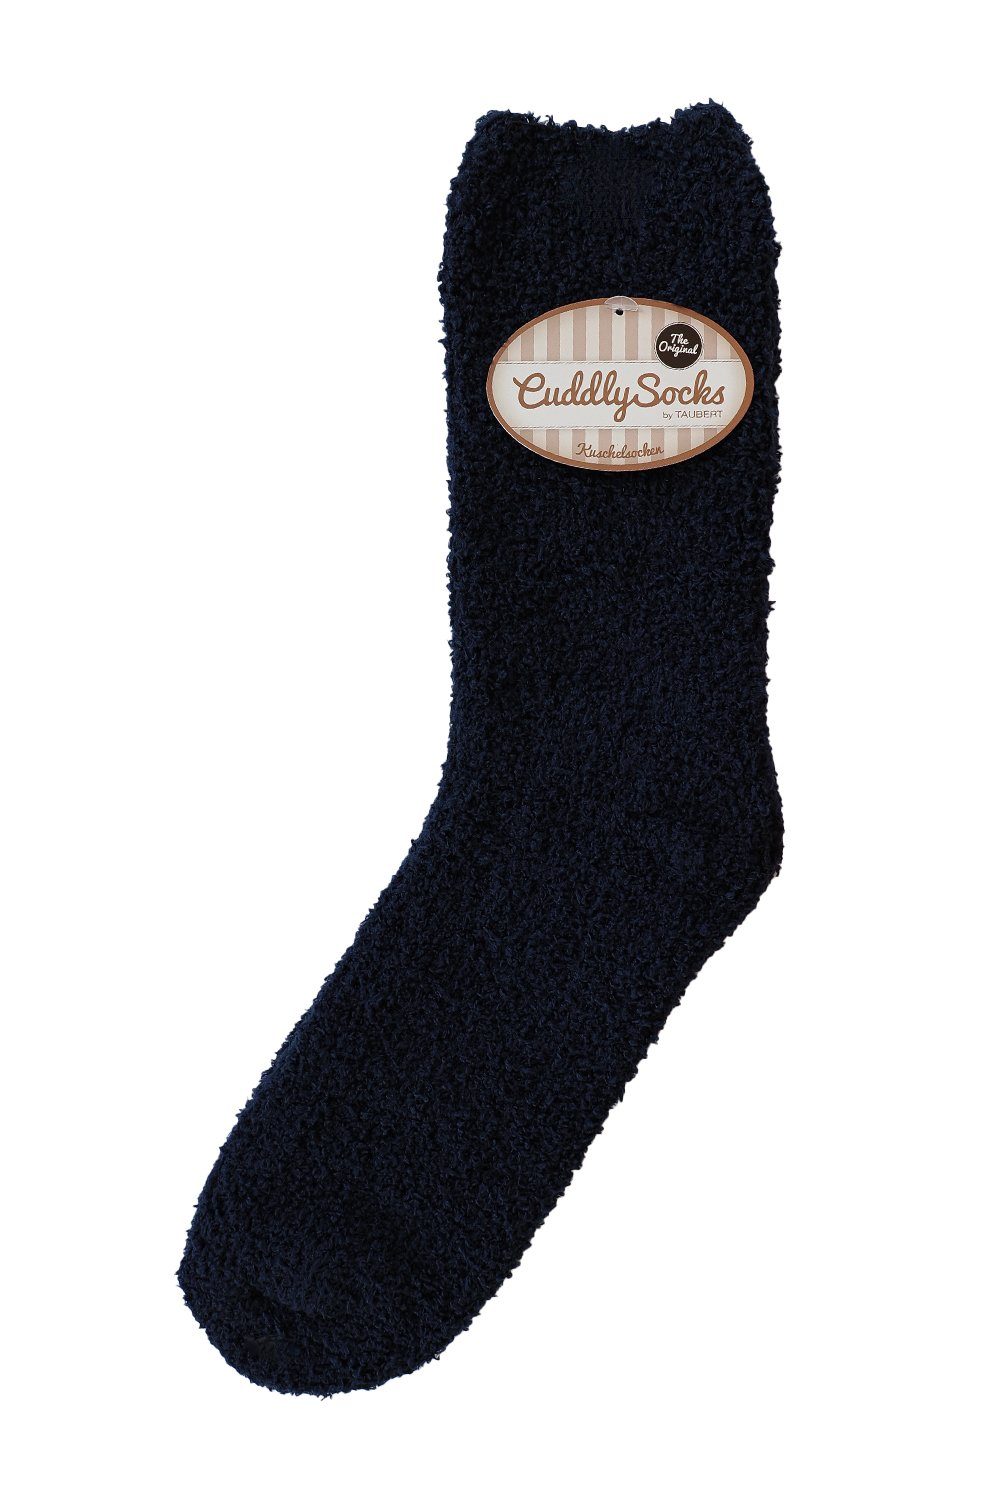 Taubert Socken Socken - Men 733900-588 navy